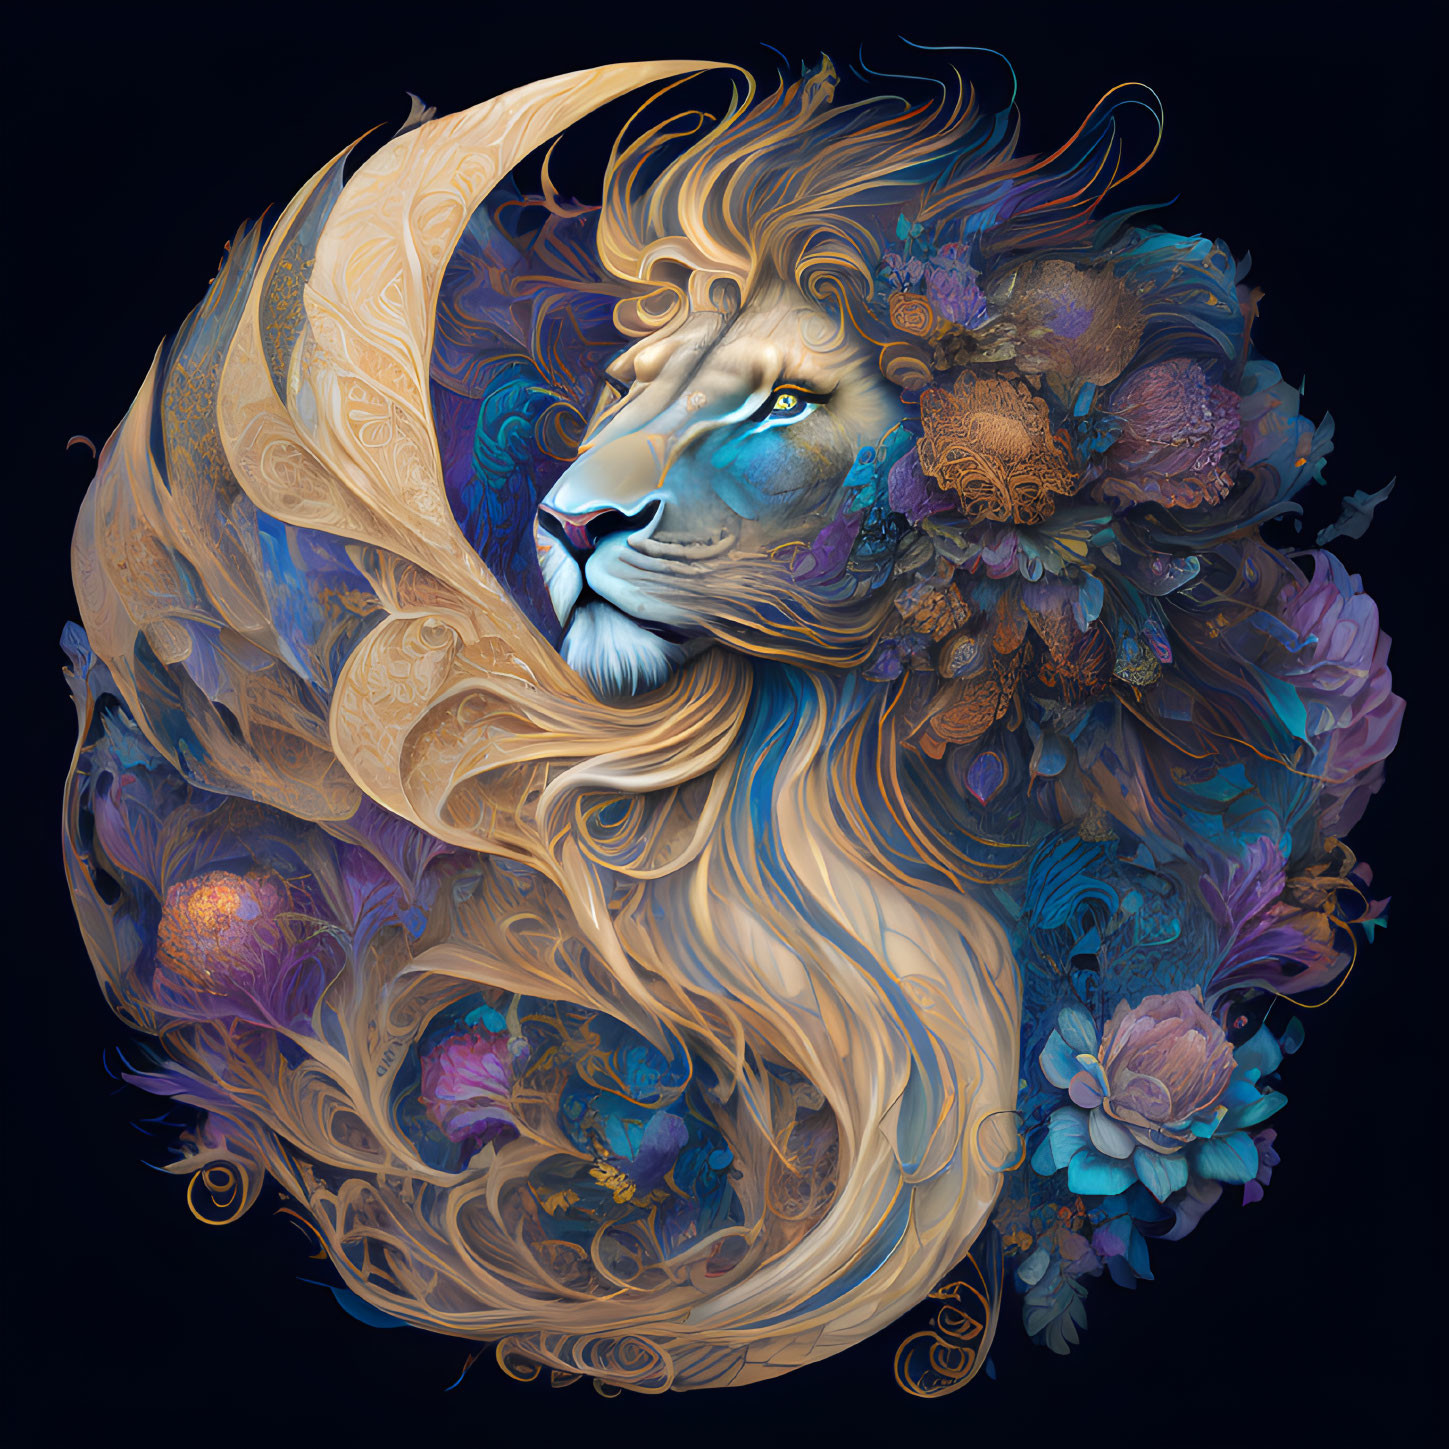 Majestic lion digital art with ornate floral patterns